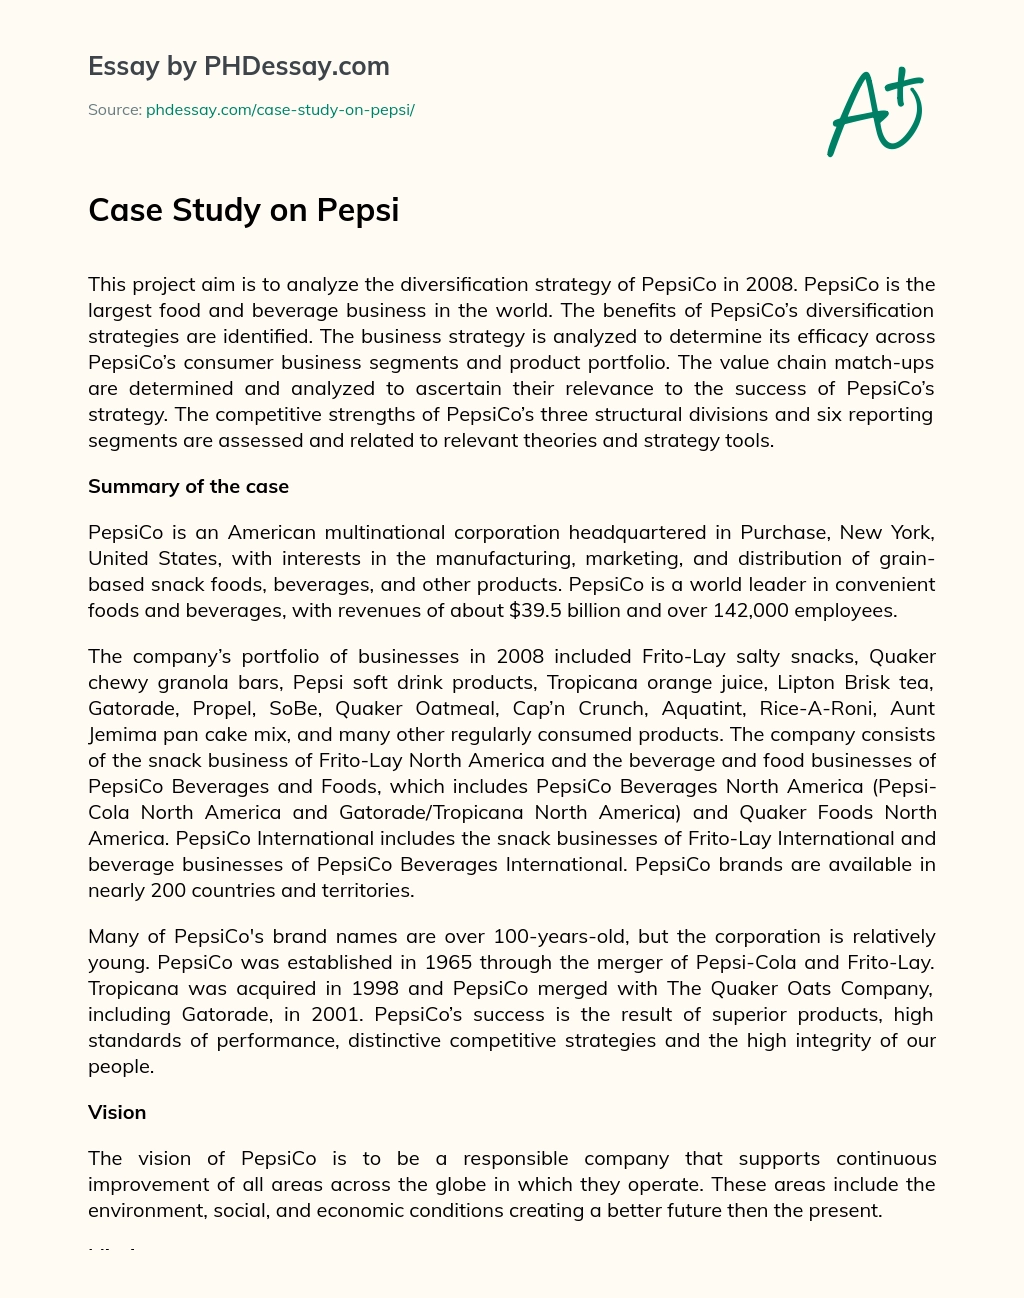 Case Study on Pepsi essay